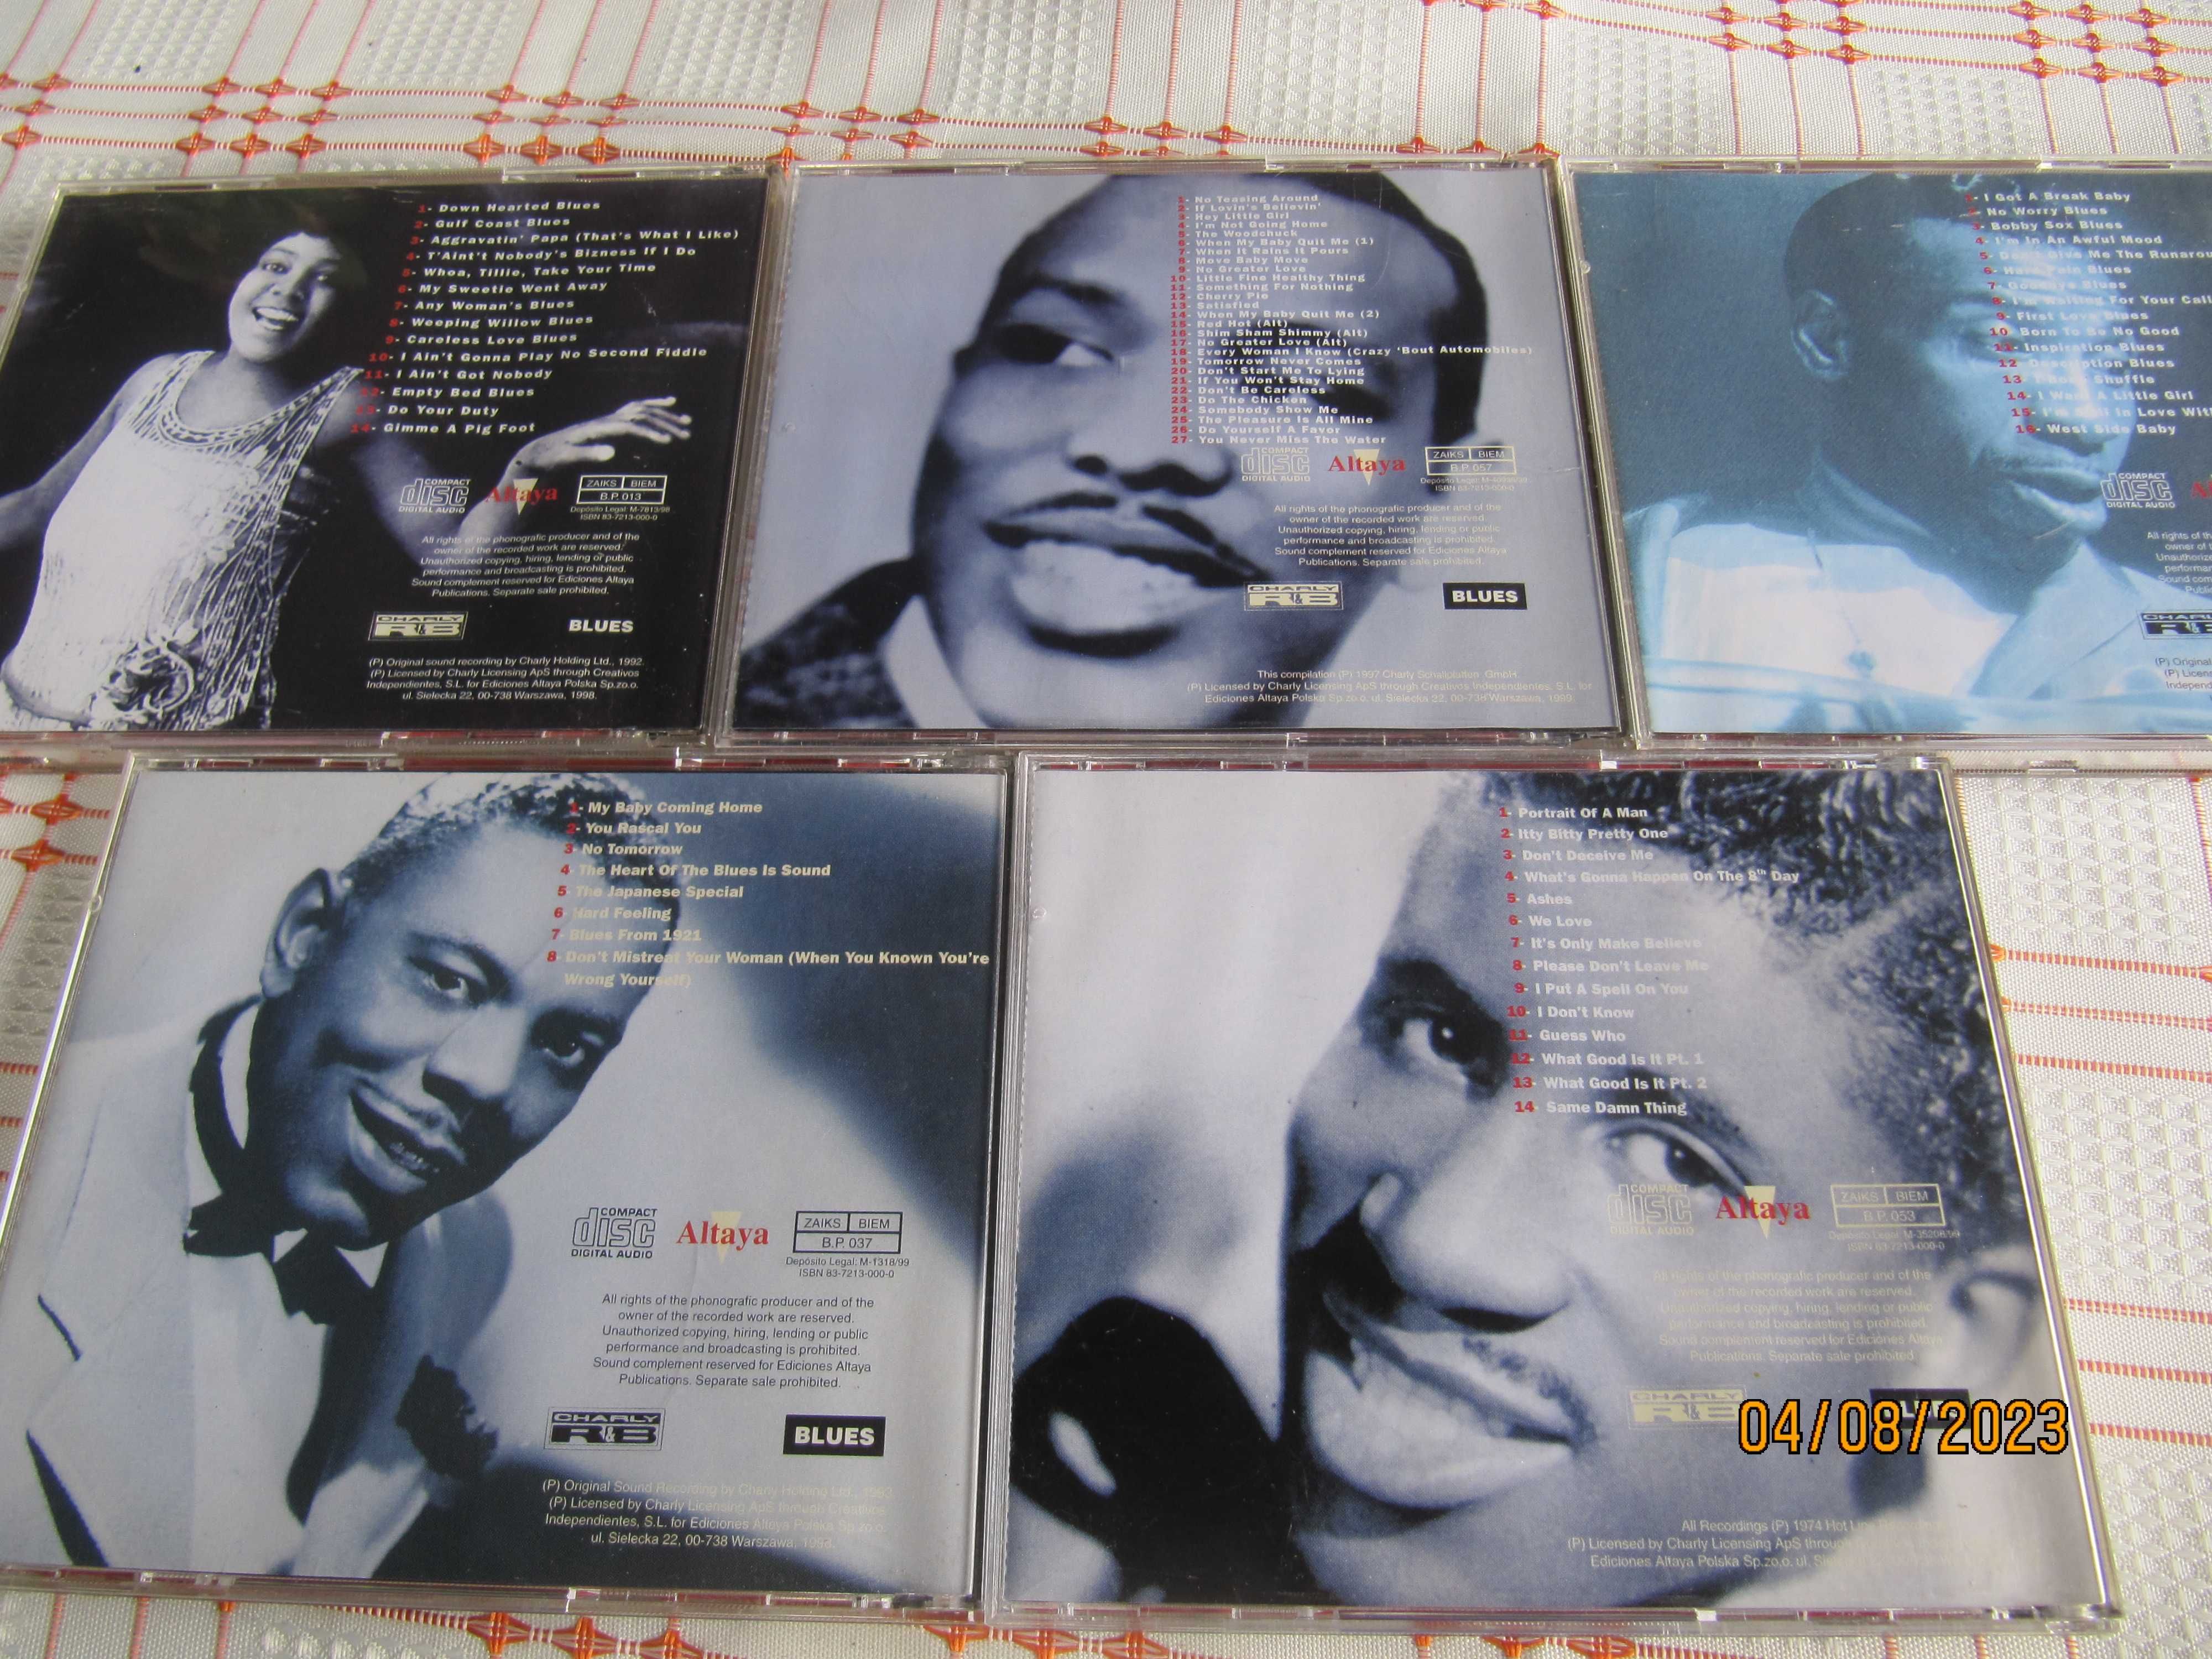 Zestaw 5 płyt CD - BLUES - 1 wydania 1998